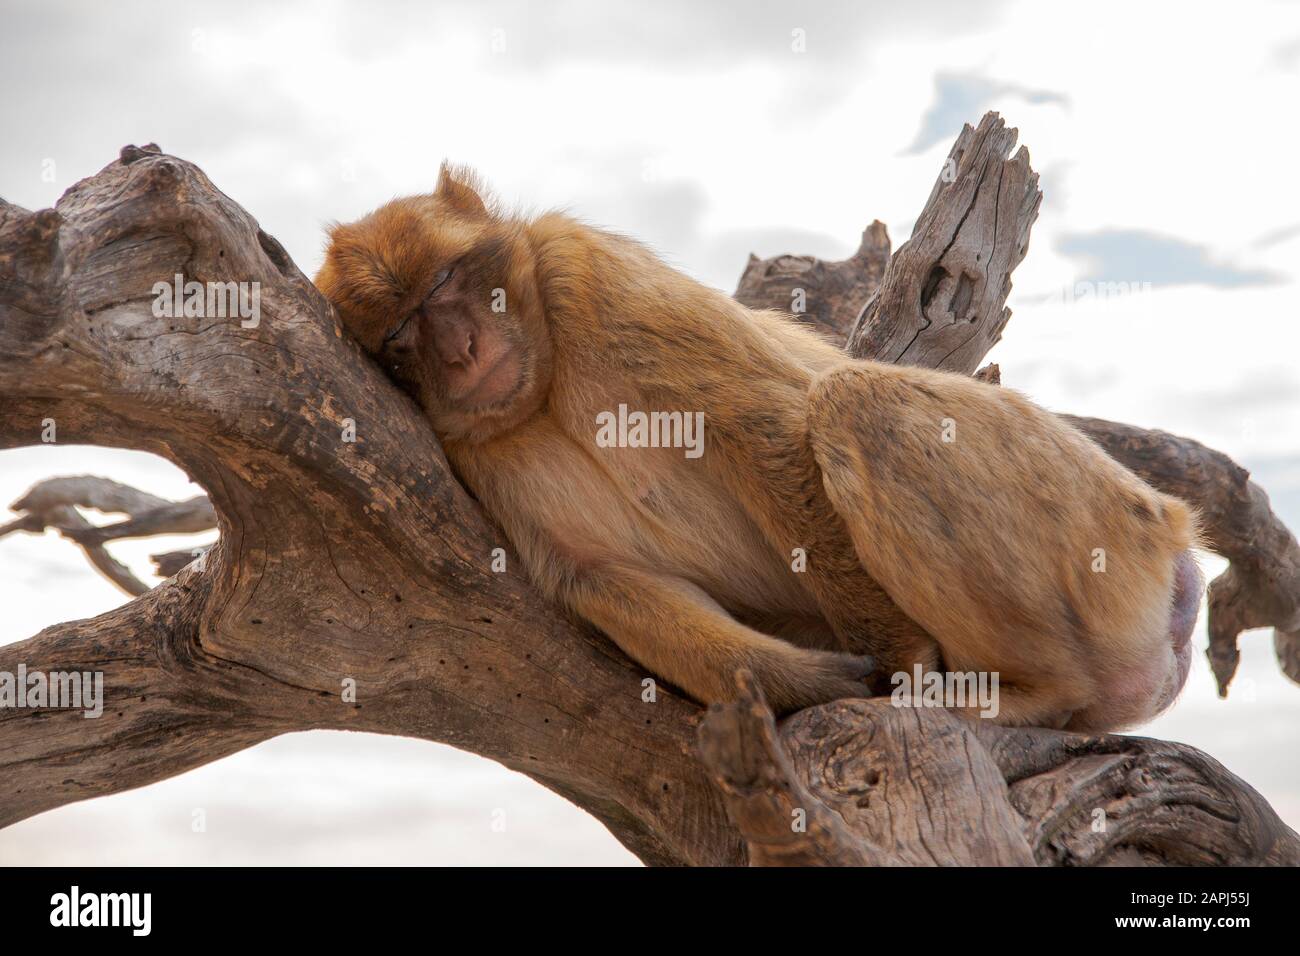 Makaque oder gibraltar Affe, der in den oberen Bereichen des Felsens lebt Stockfoto